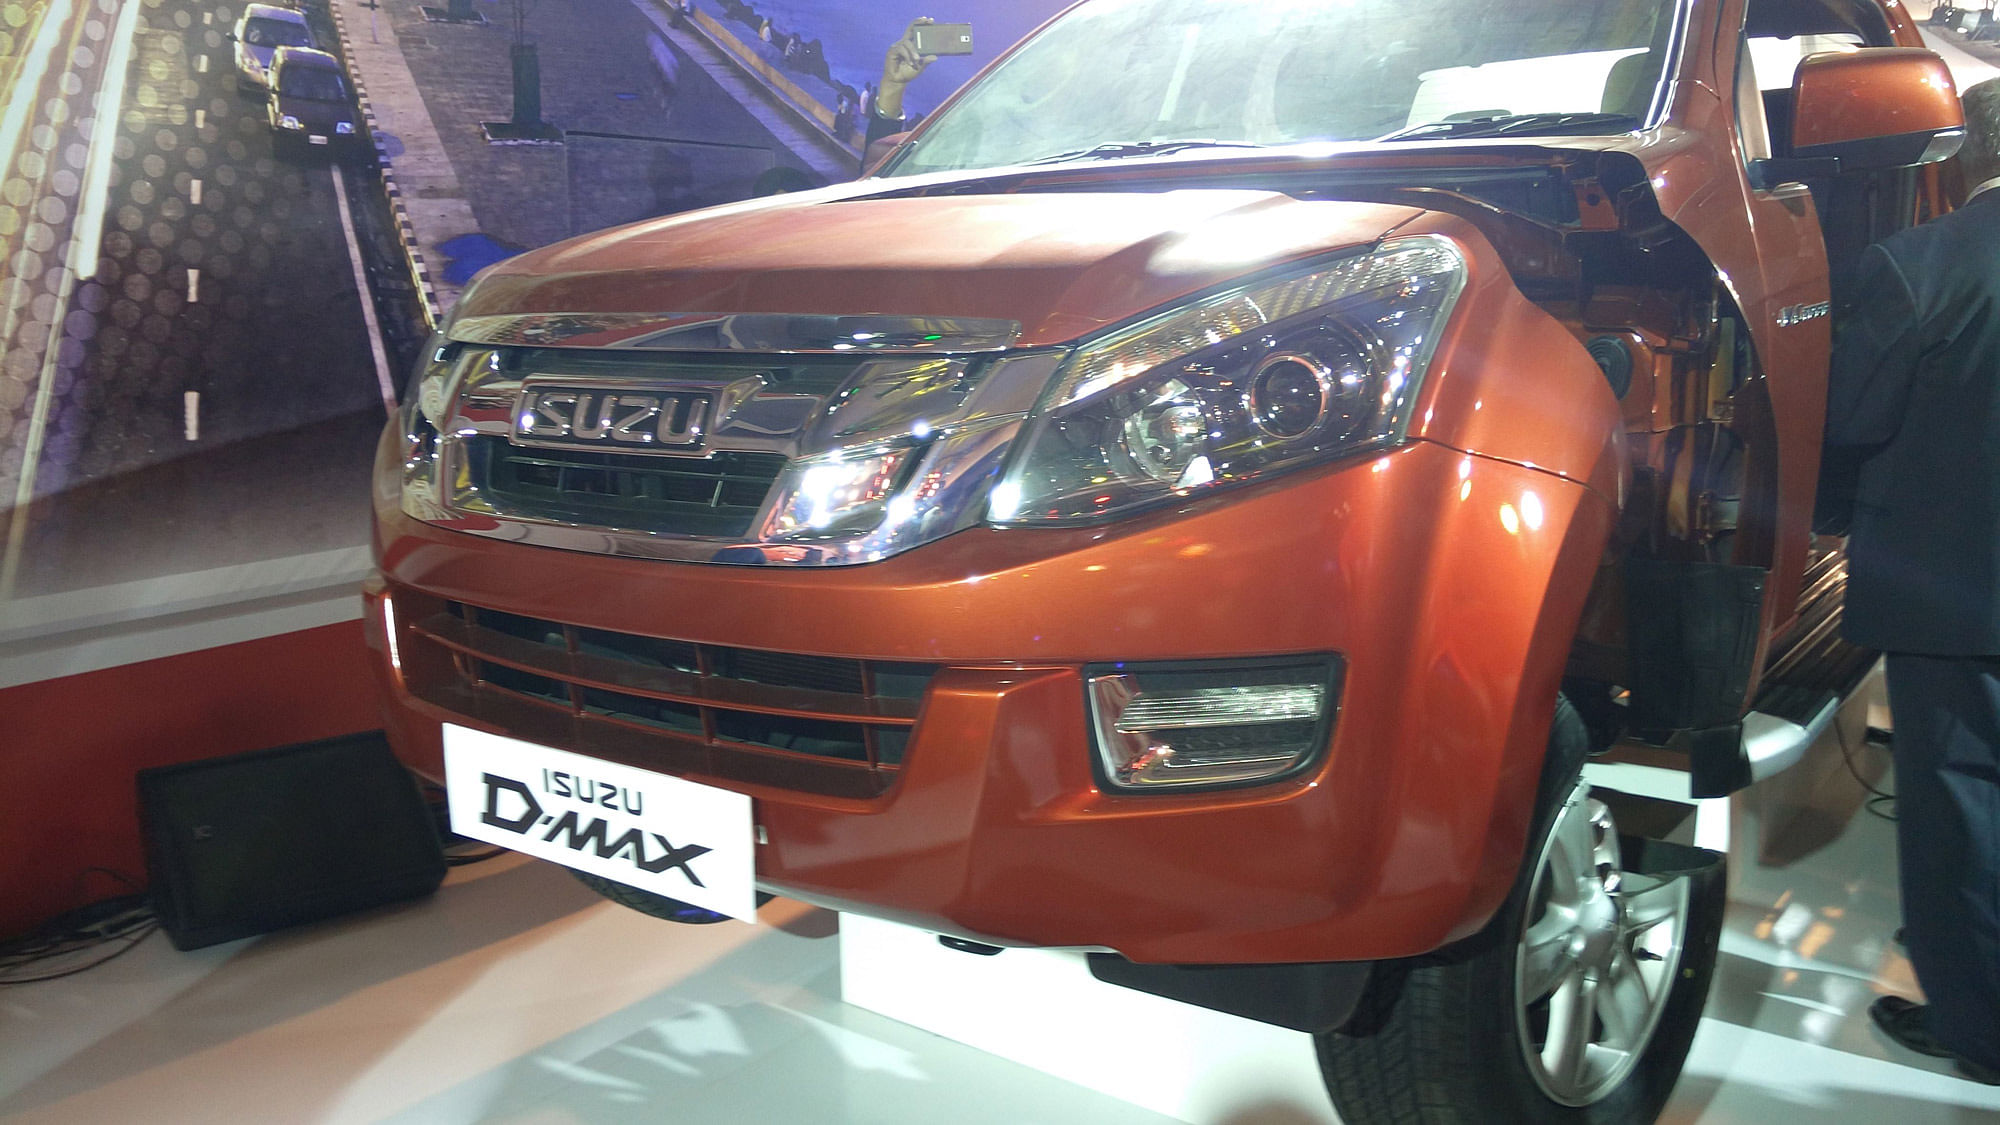 Isuzu D-Max unveiled at Delhi Auto Expo 2016. (Photo: Aaqib Raza Khan)